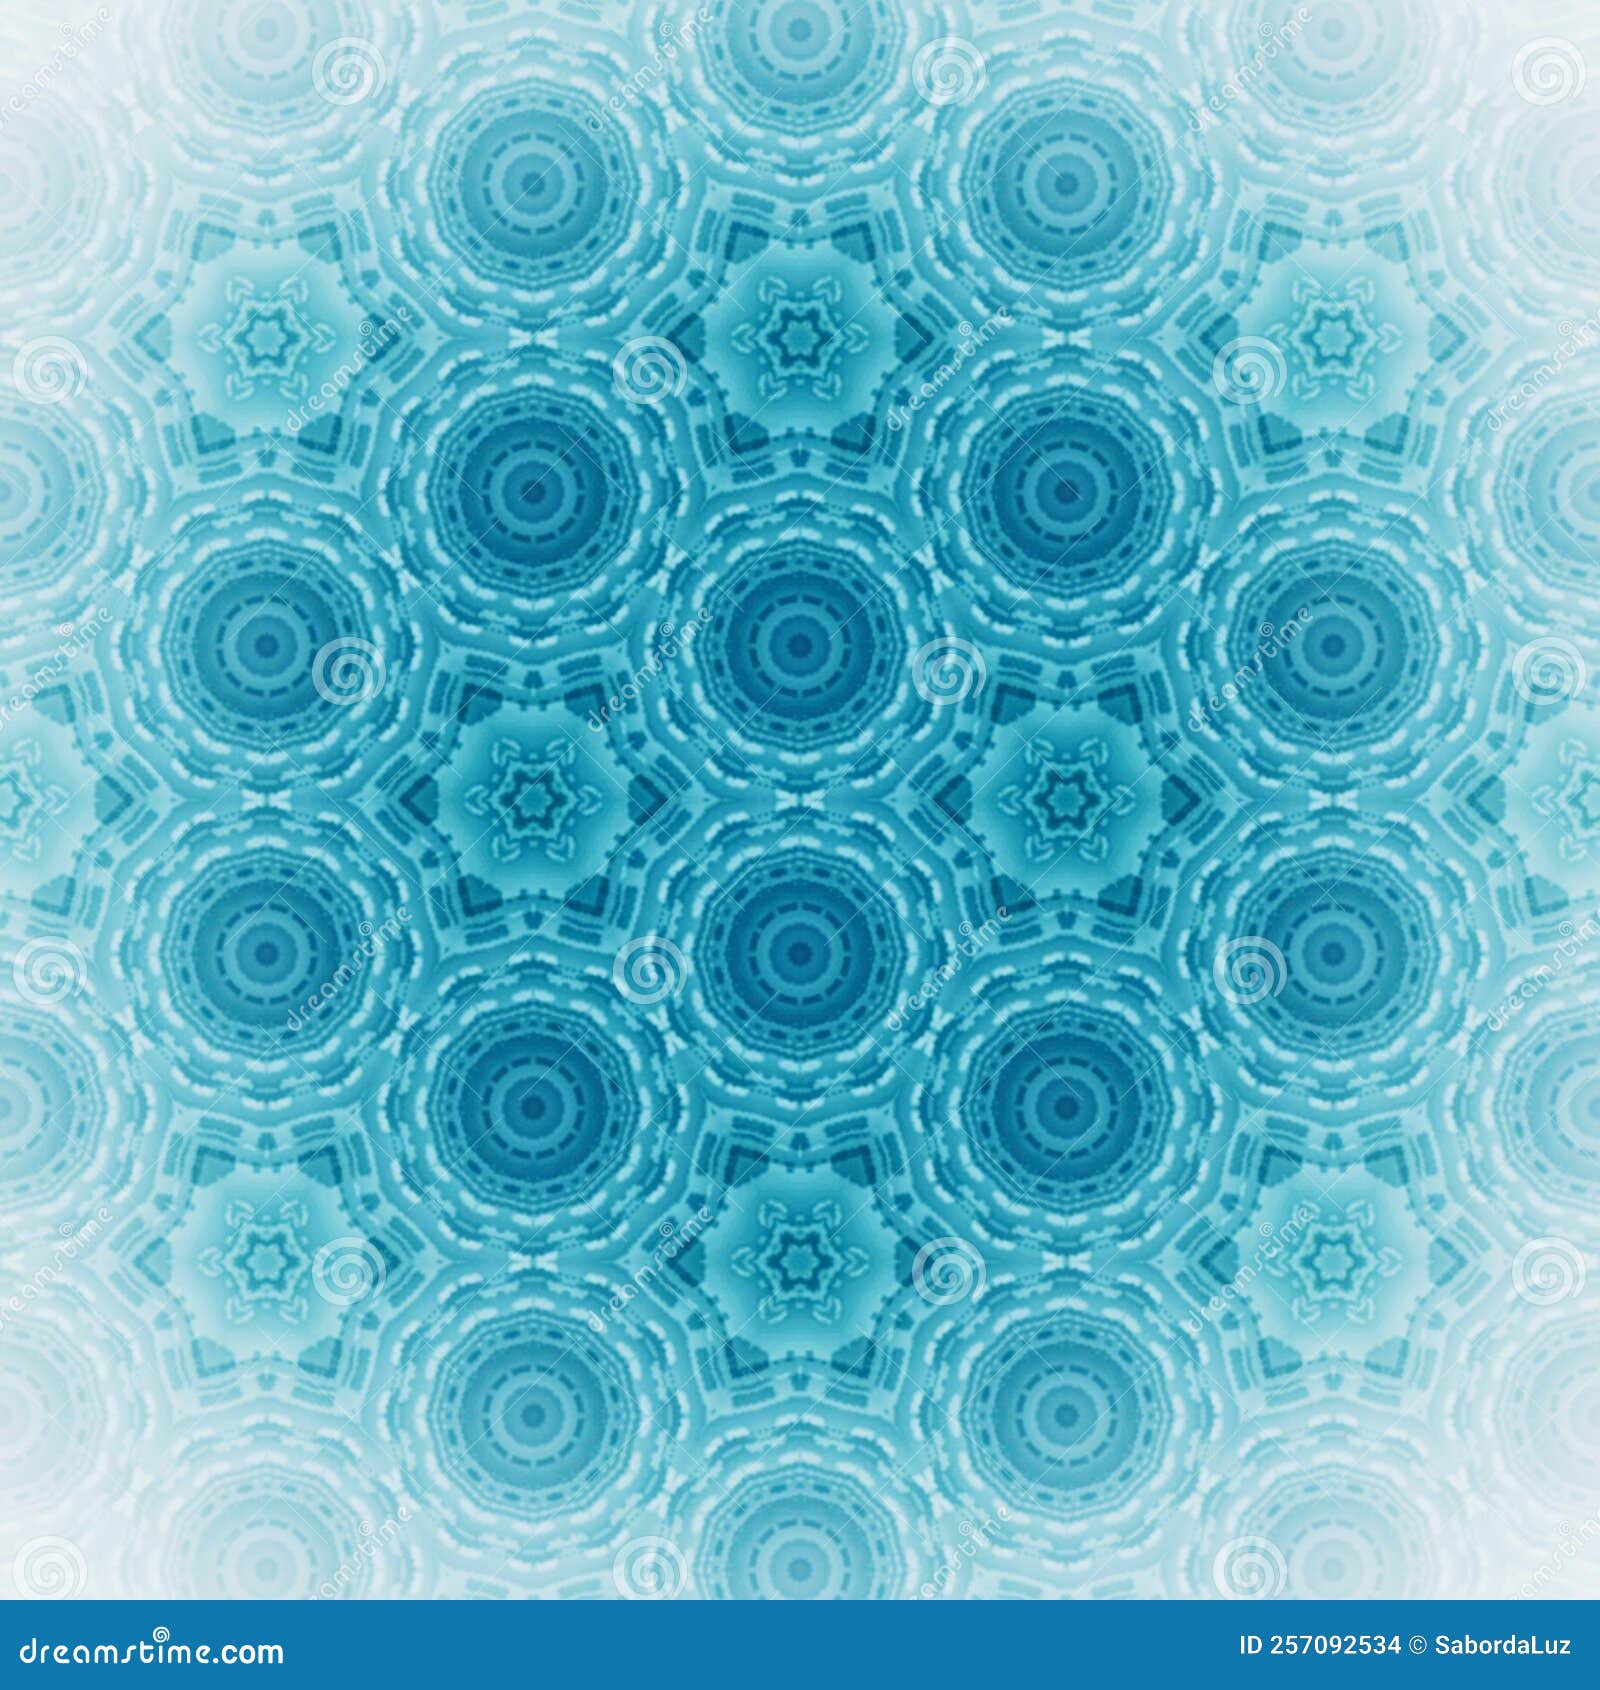 fantastic fractals kaleidoscope background texture